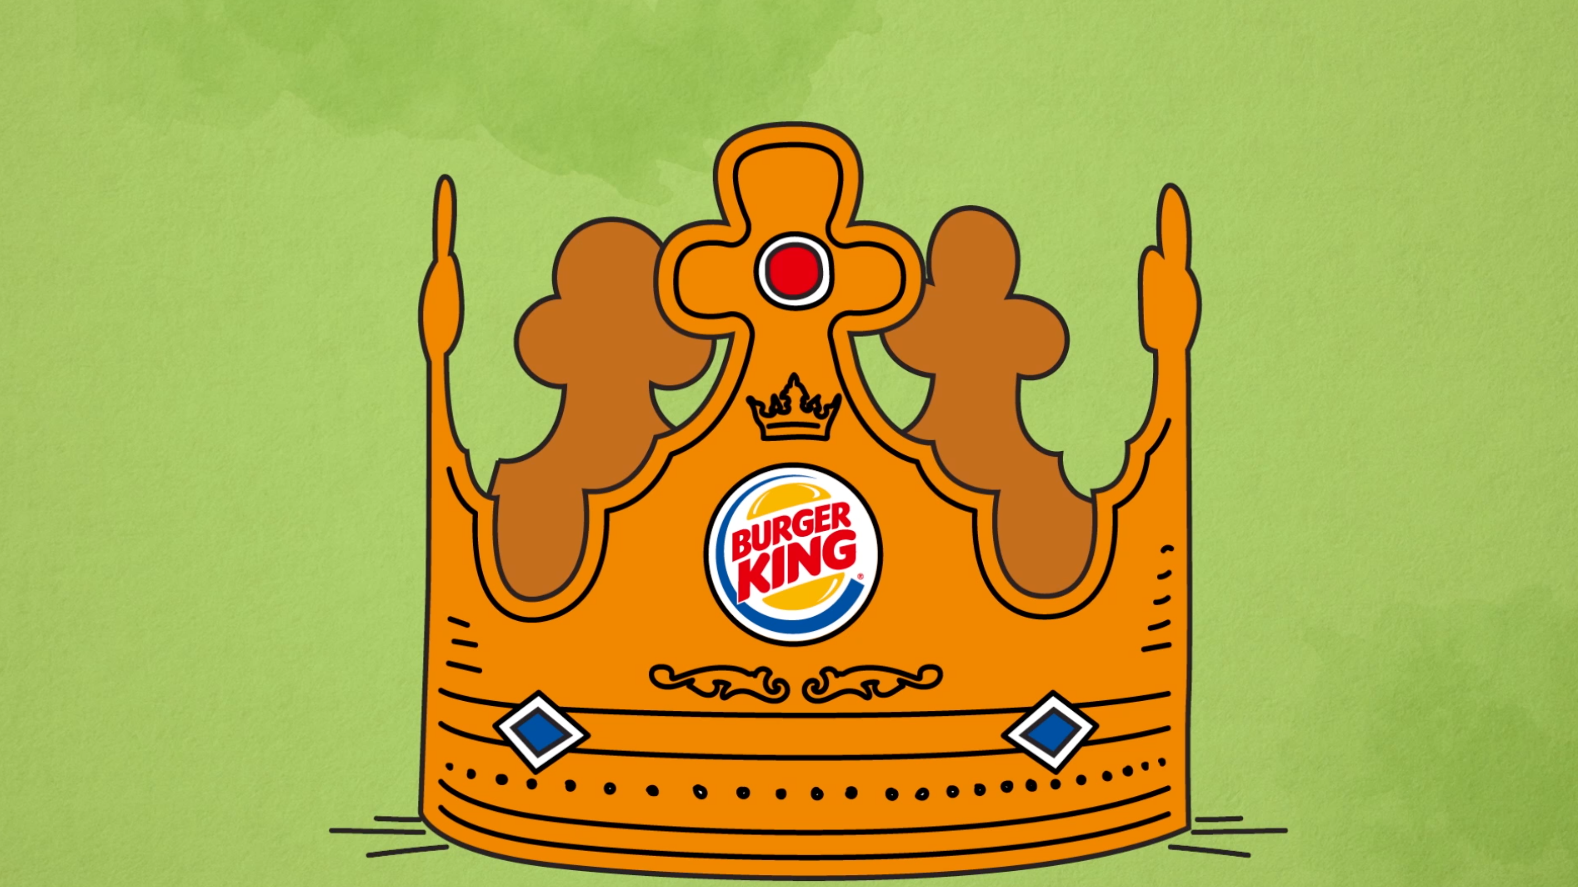 BURGER KING – CRISPY KING